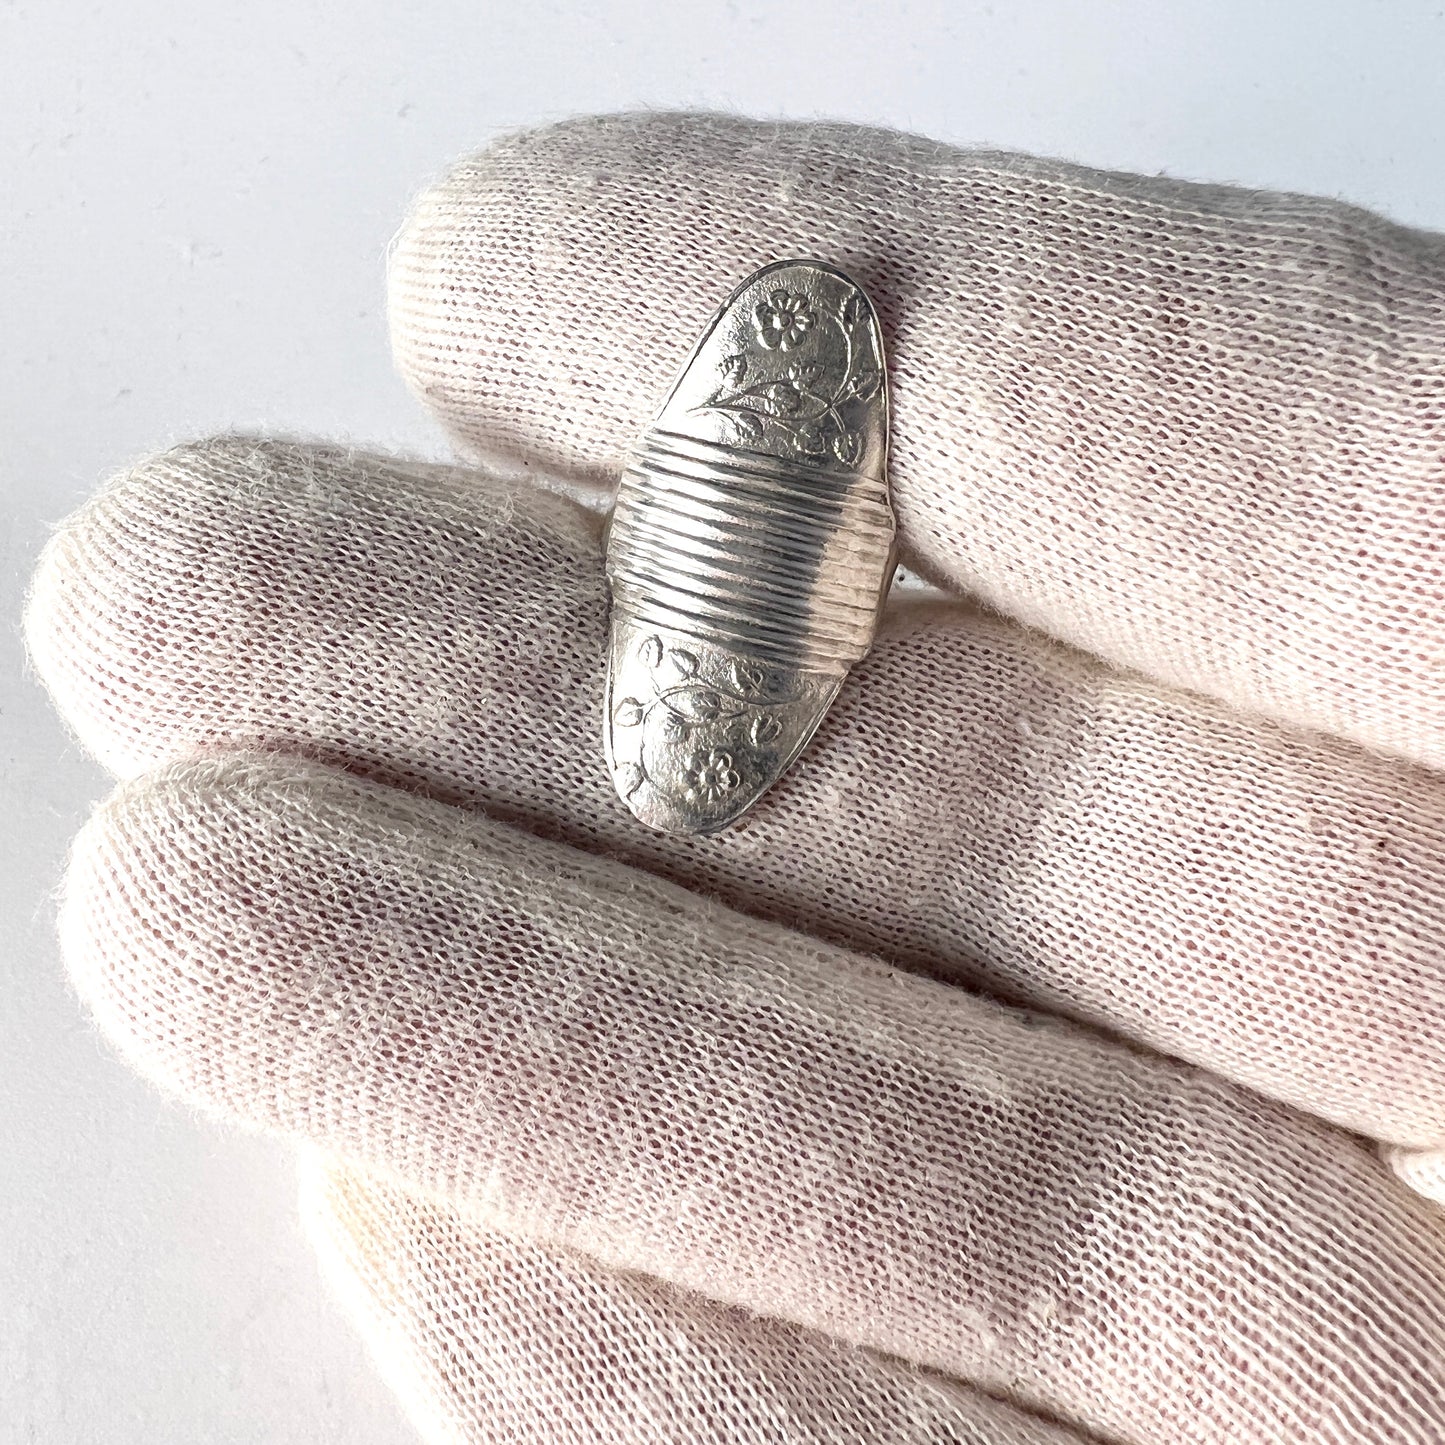 AR Örebro, Sweden year 1857. Antique Solid Silver Thimble Ring.